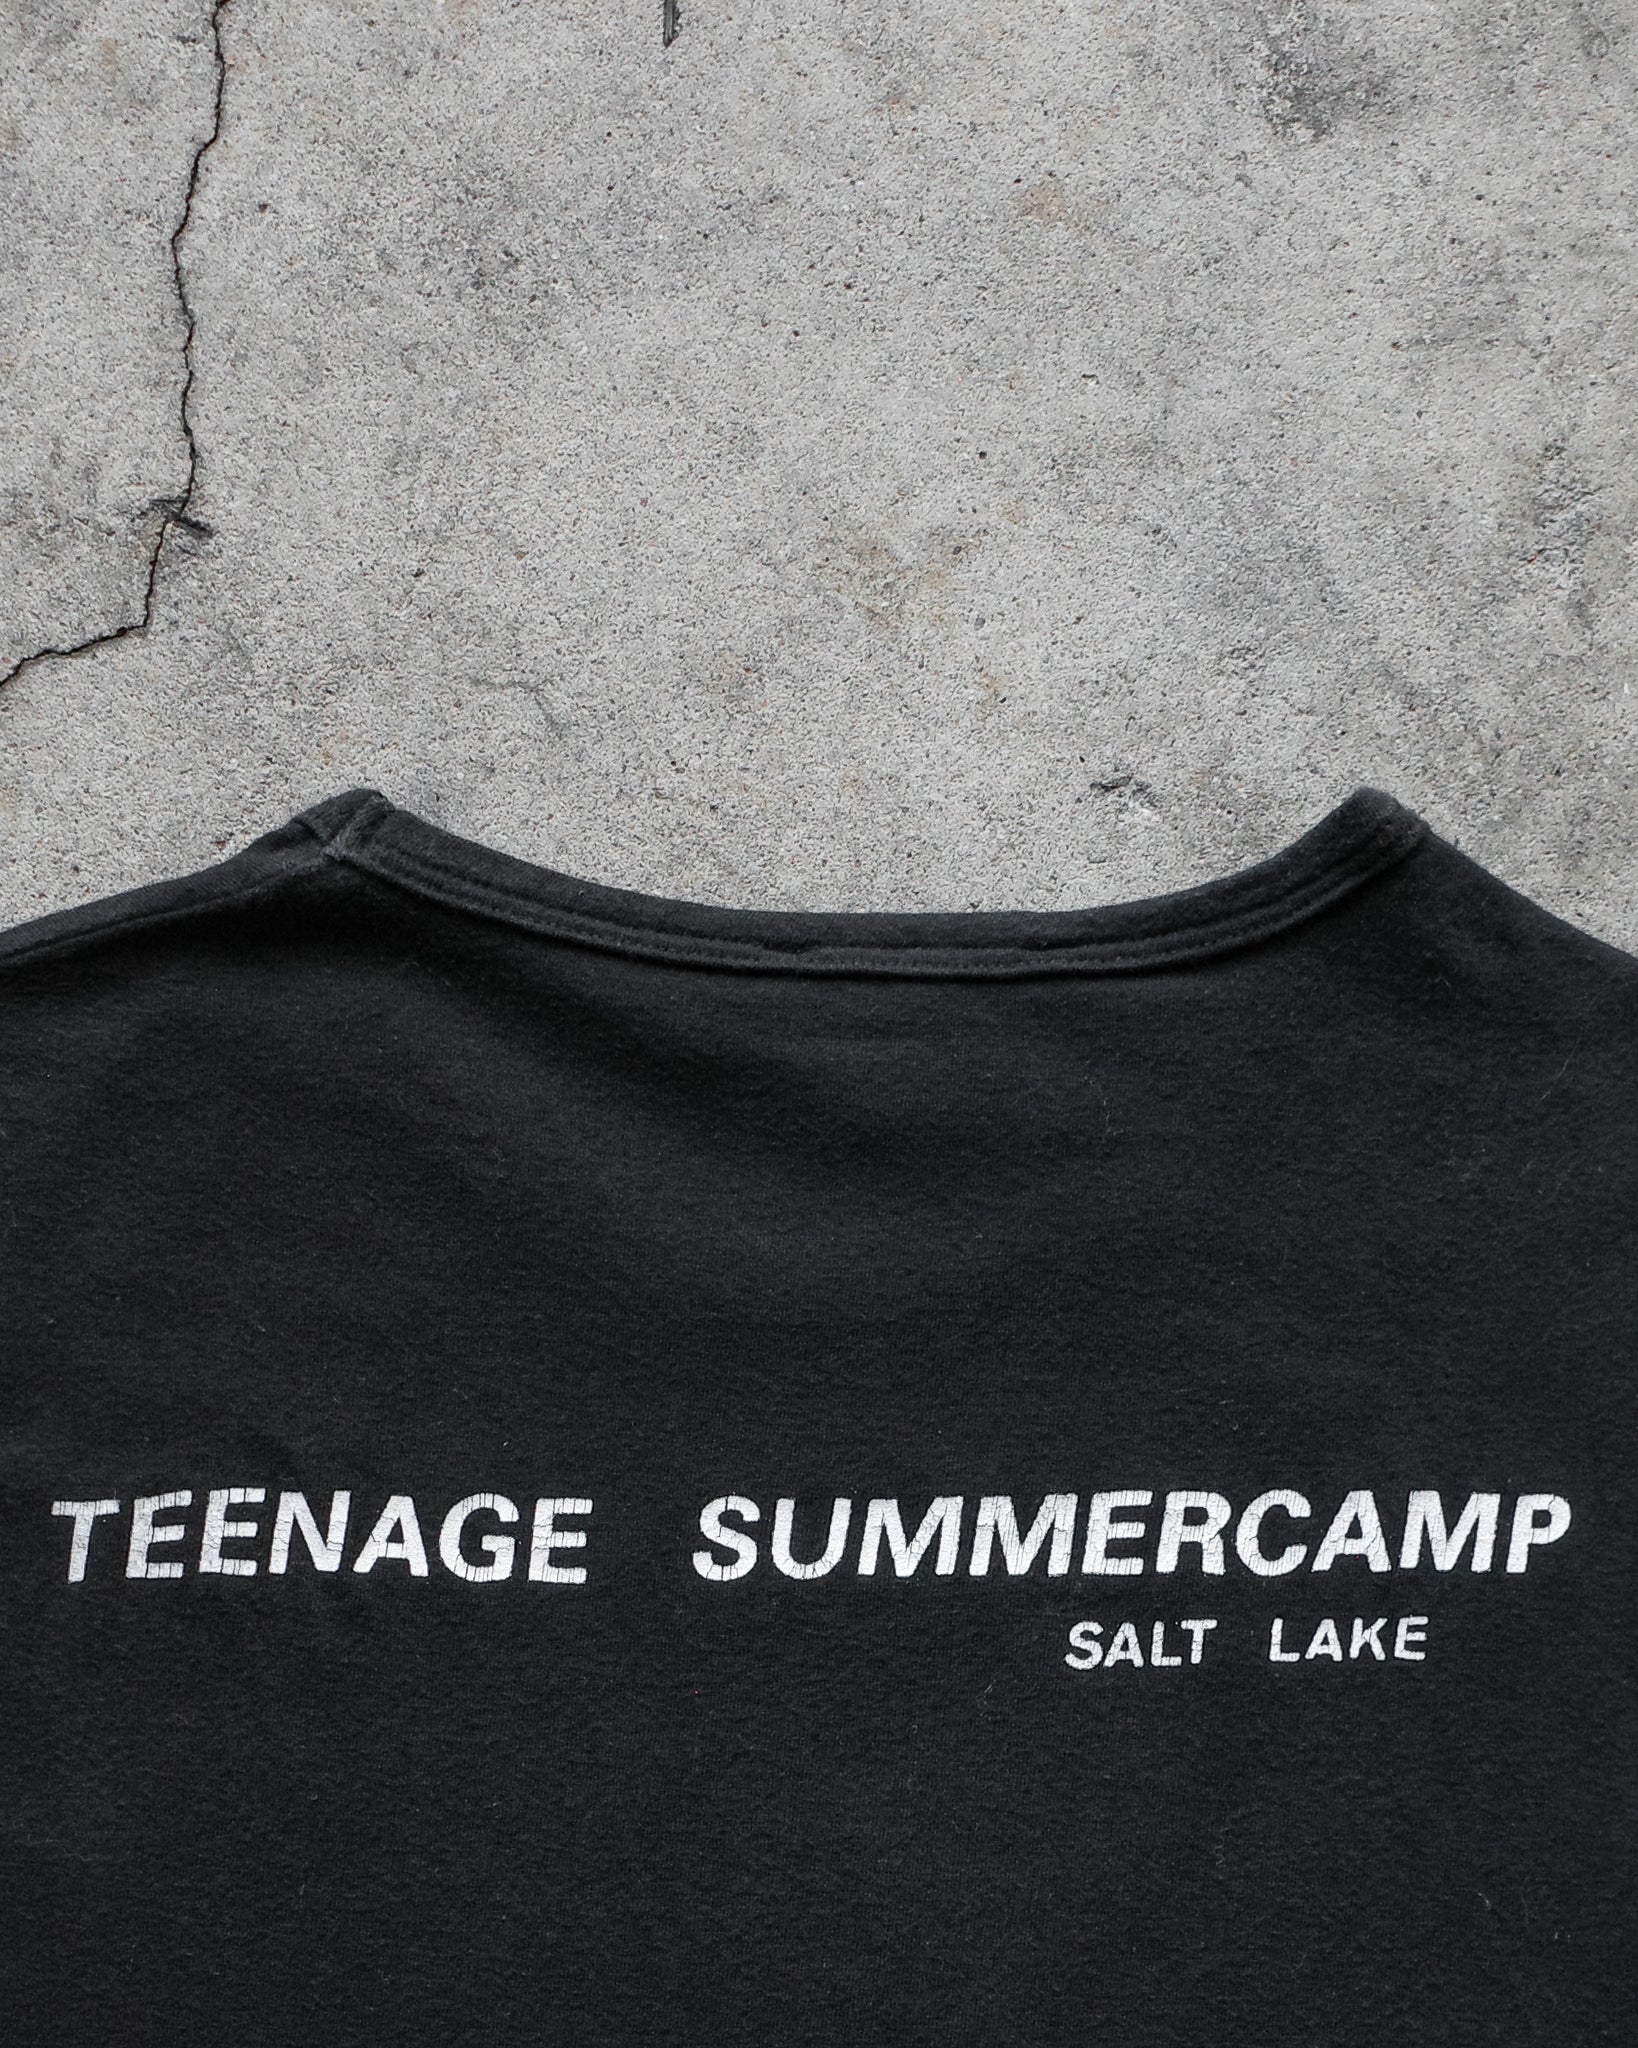 Raf Simons SS97 "Teenage Summercamp" Tank